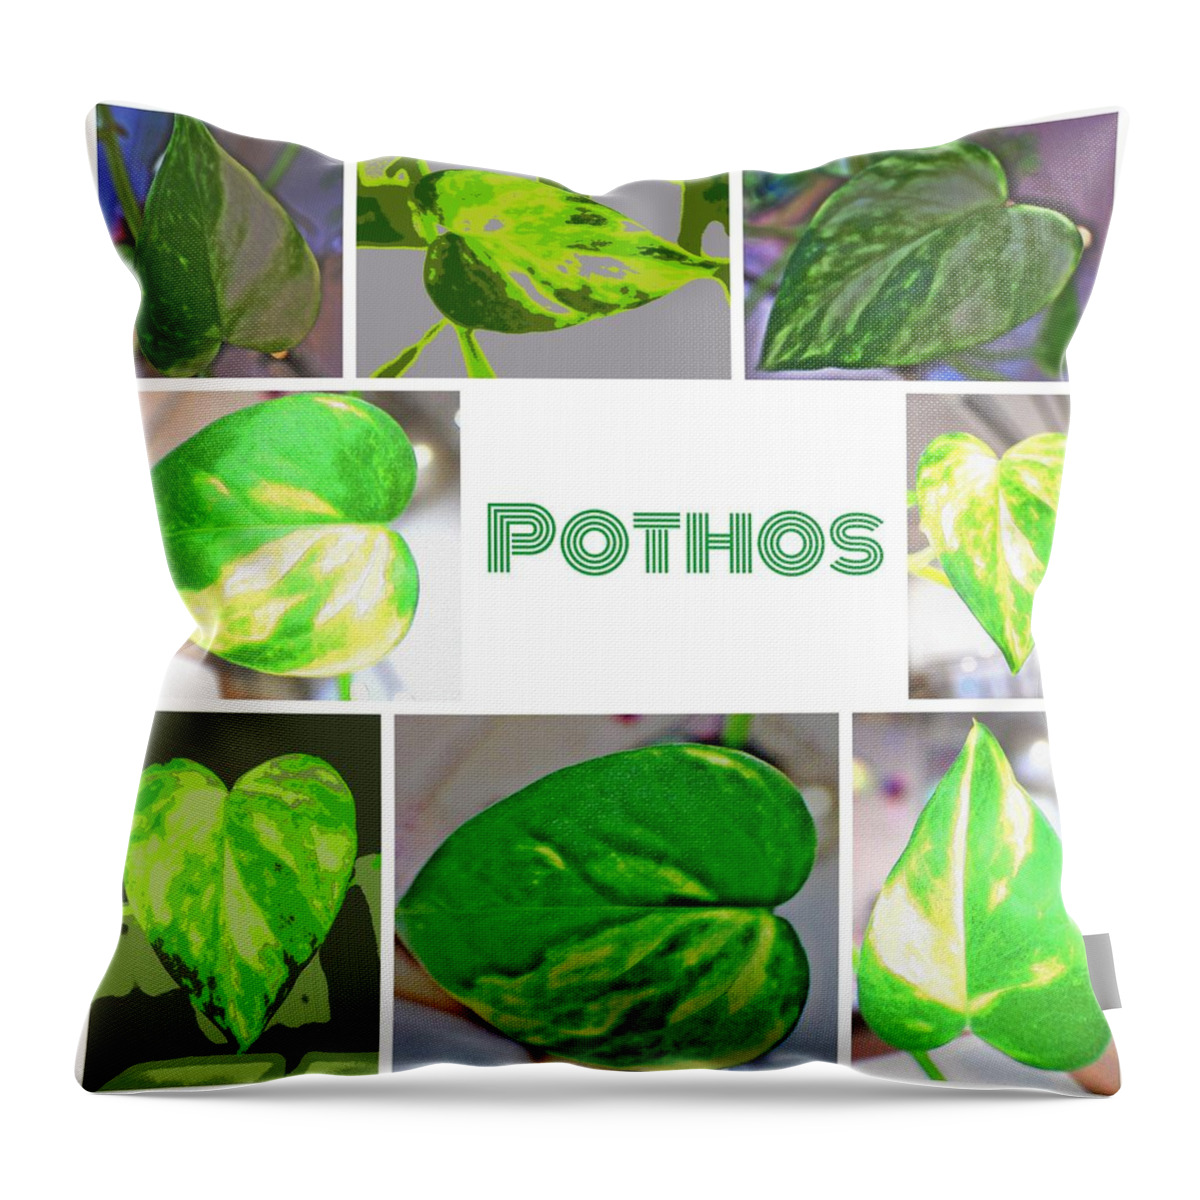 Pothos Throw Pillow featuring the digital art Pothos by Kumiko Izumi